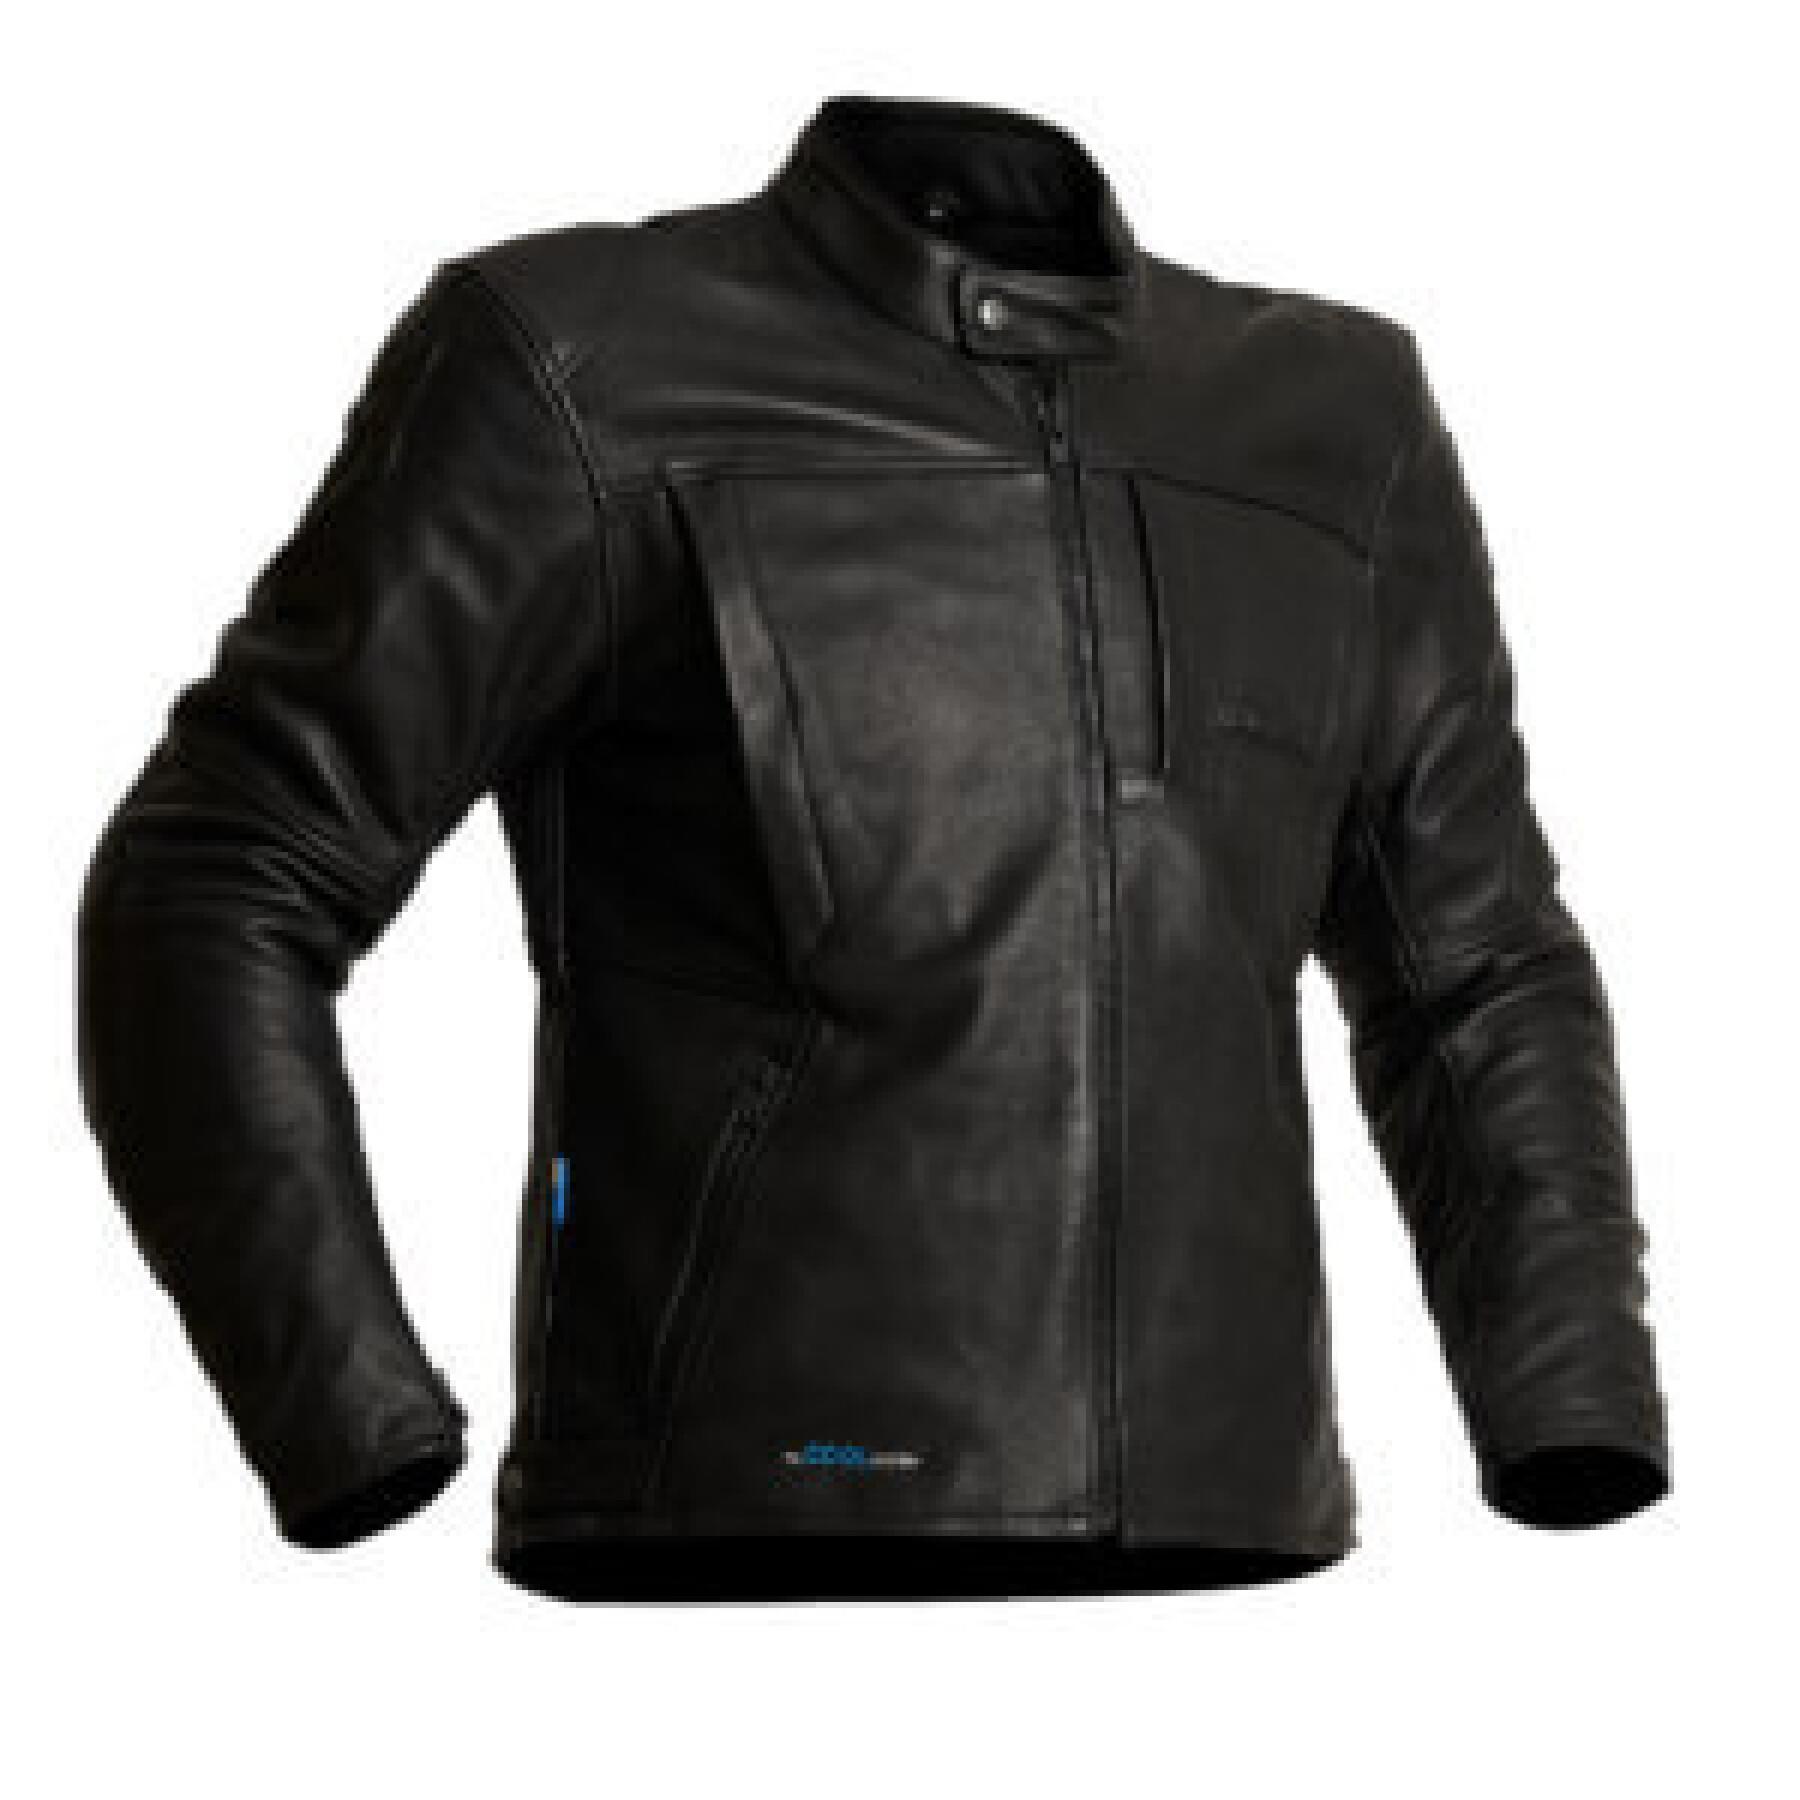 Motorcycle leather jacket Halvarssons Racken